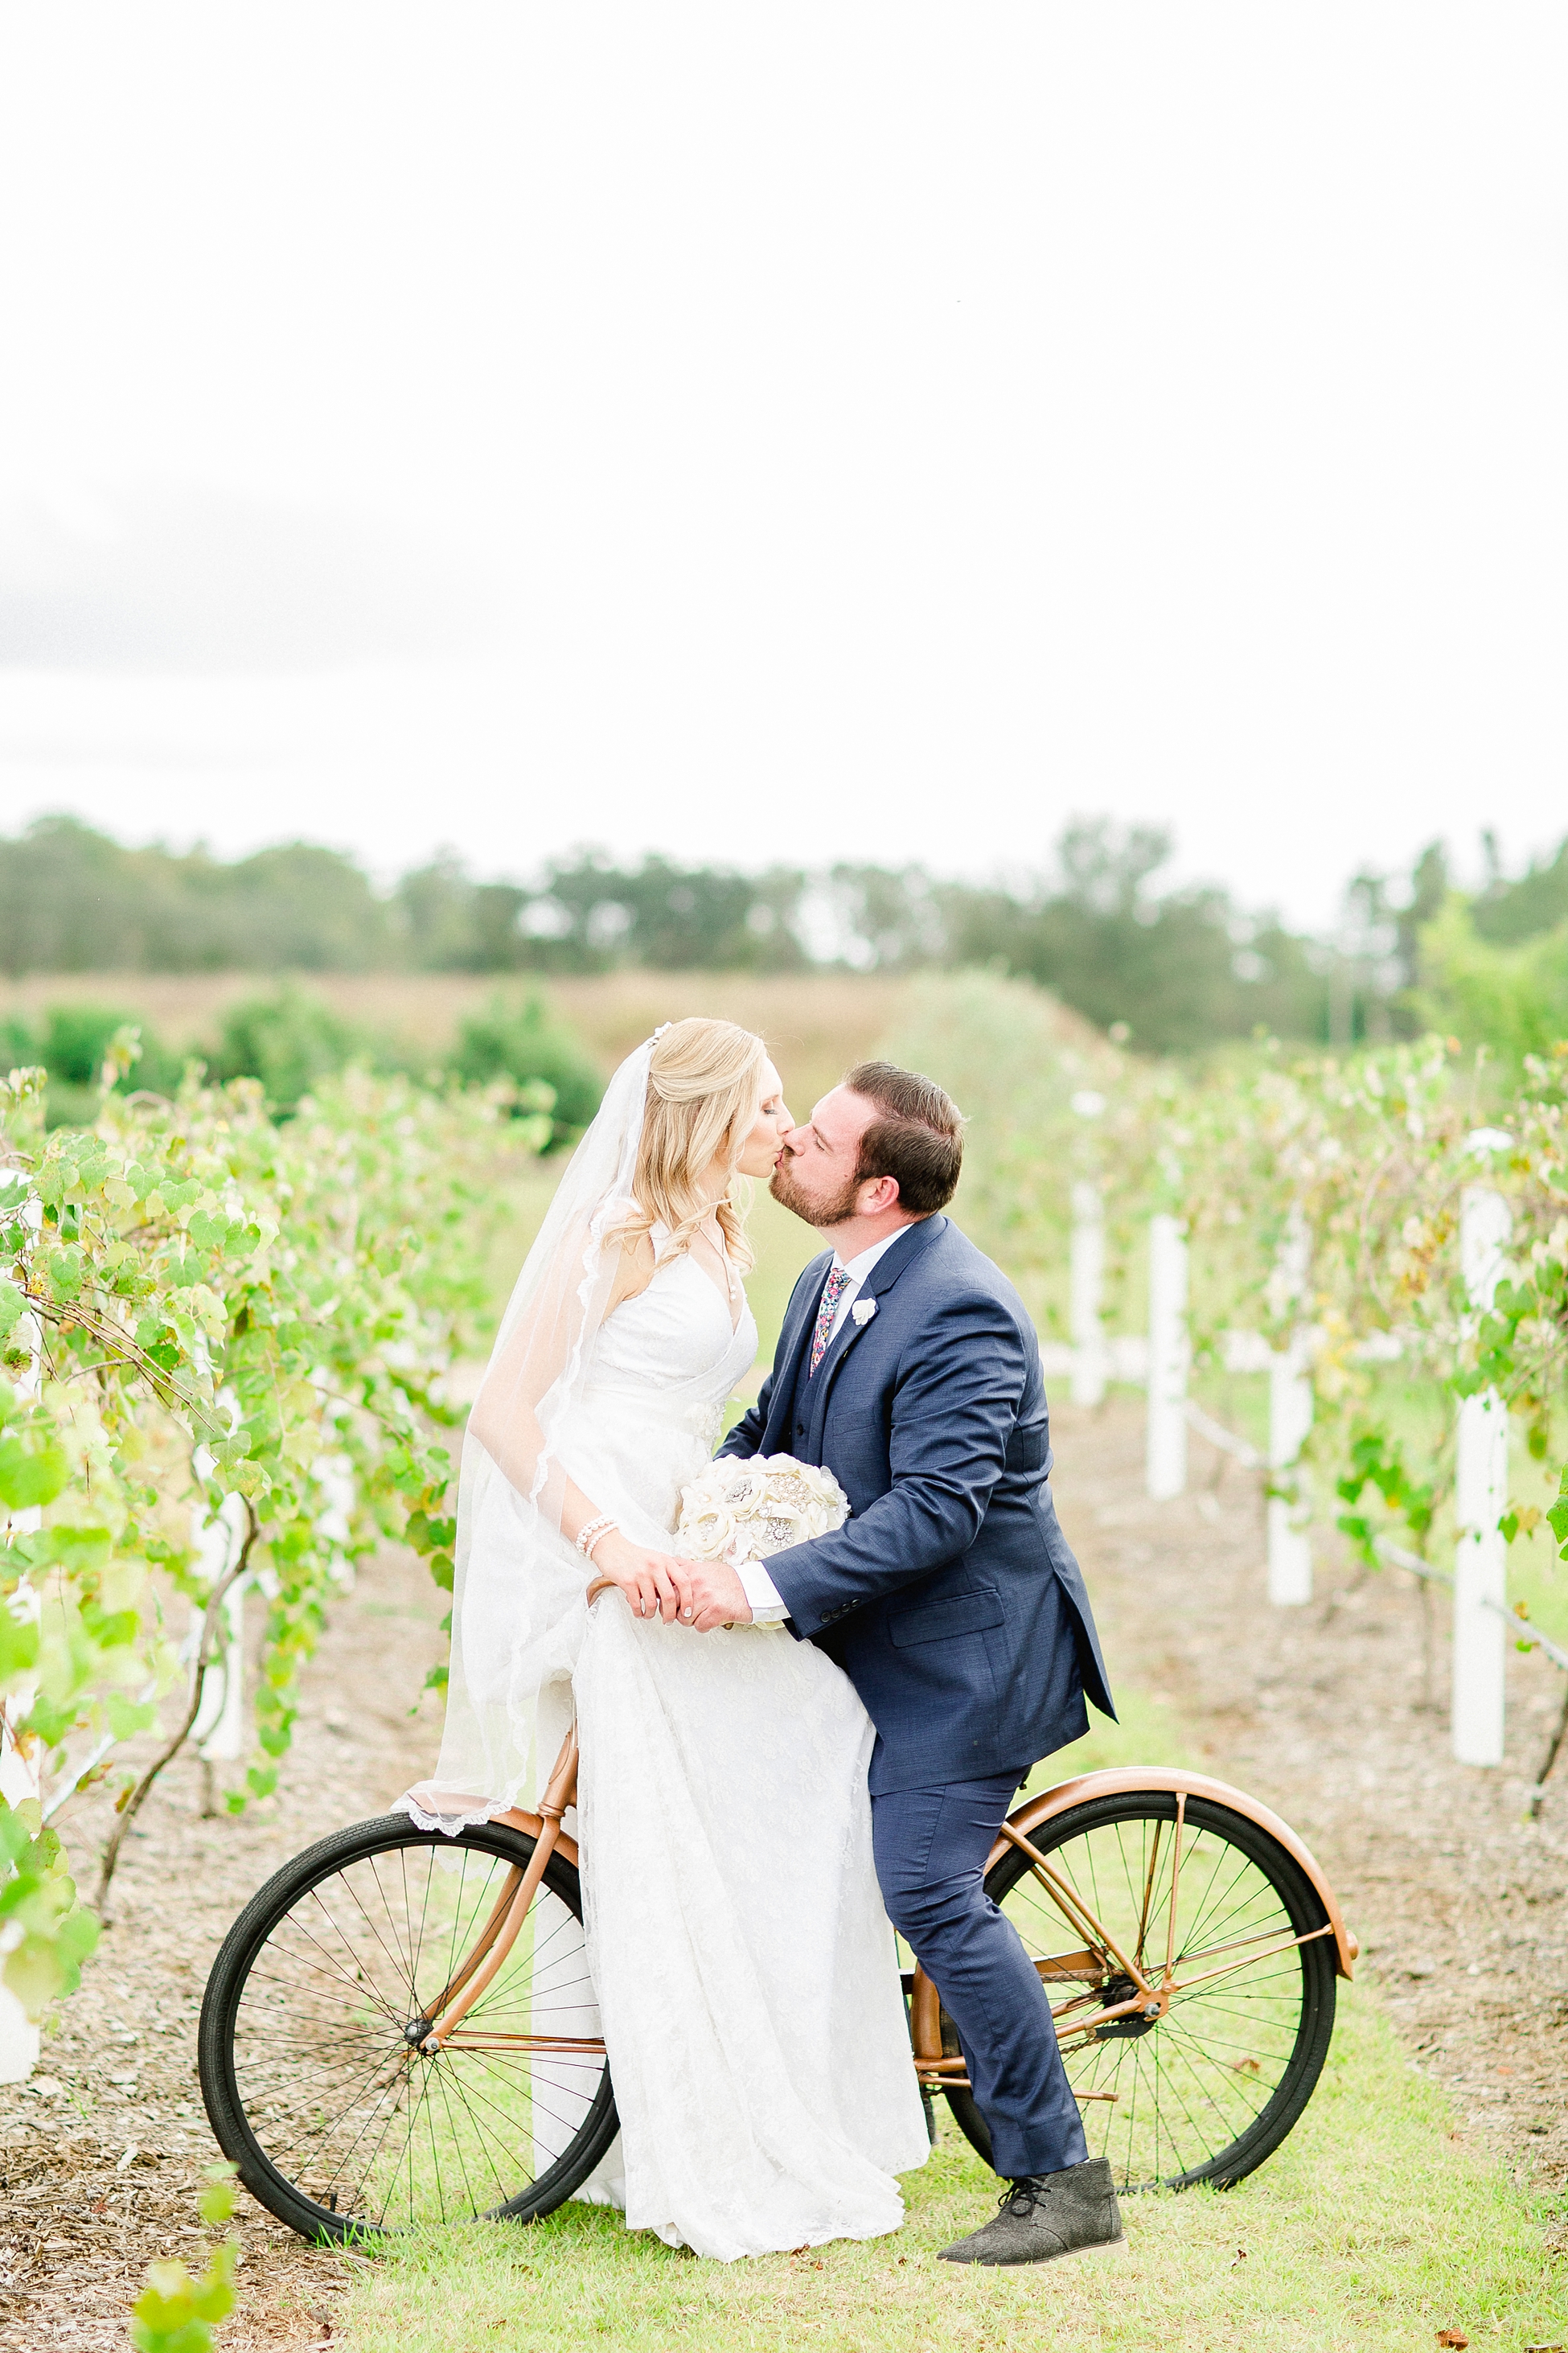 Island Grove Wine Company Wedding | © Ailyn La Torre Photography 2018